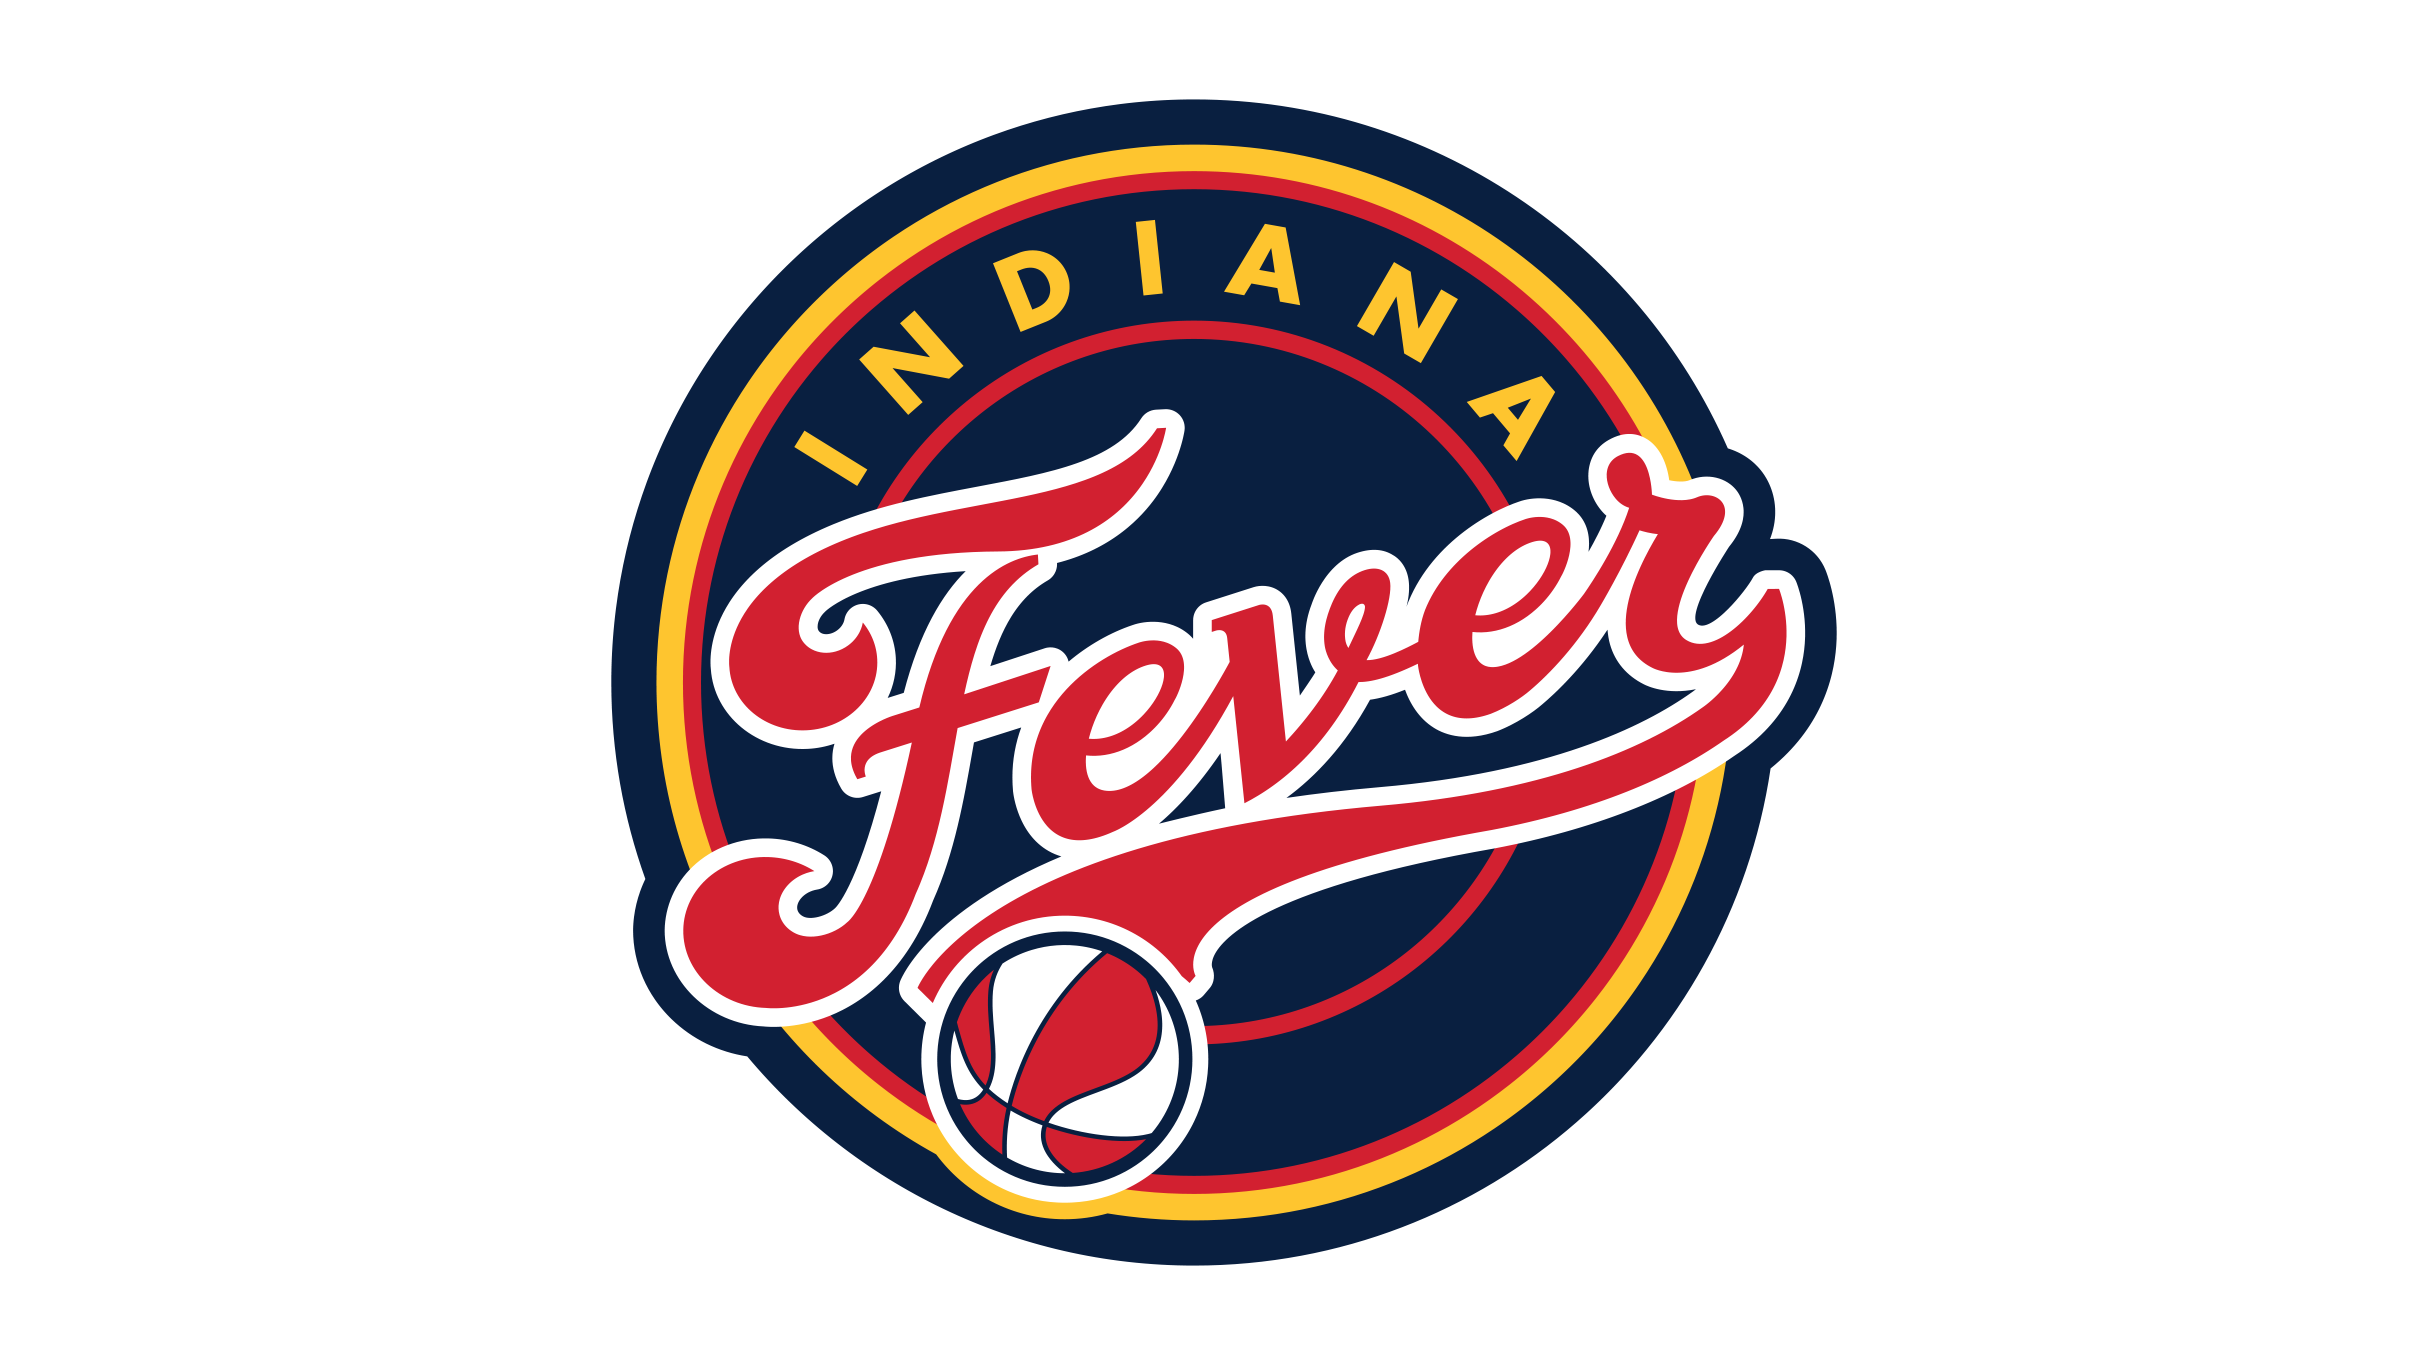 Indiana Fever vs. Phoenix Mercury presales in Indianapolis